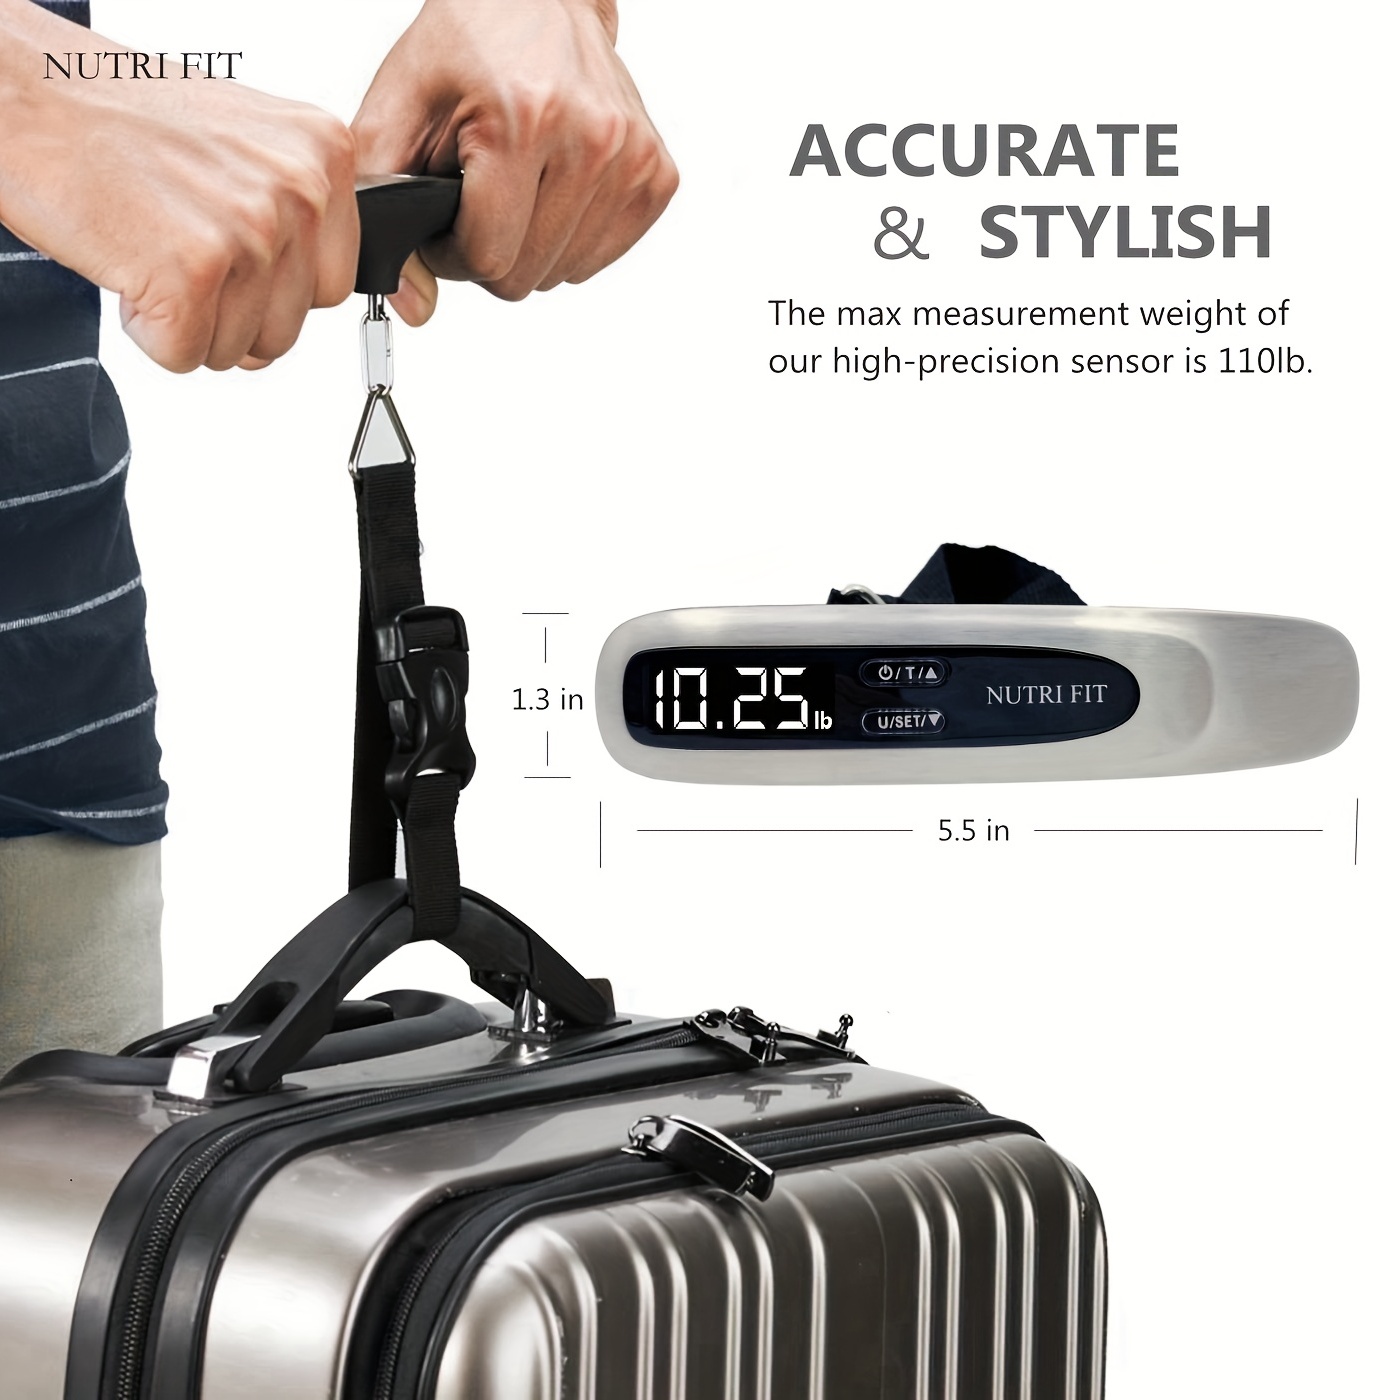 Digital Luggage Weight Scale Heavy Duty 50 Kg/110 Lbs Handheld